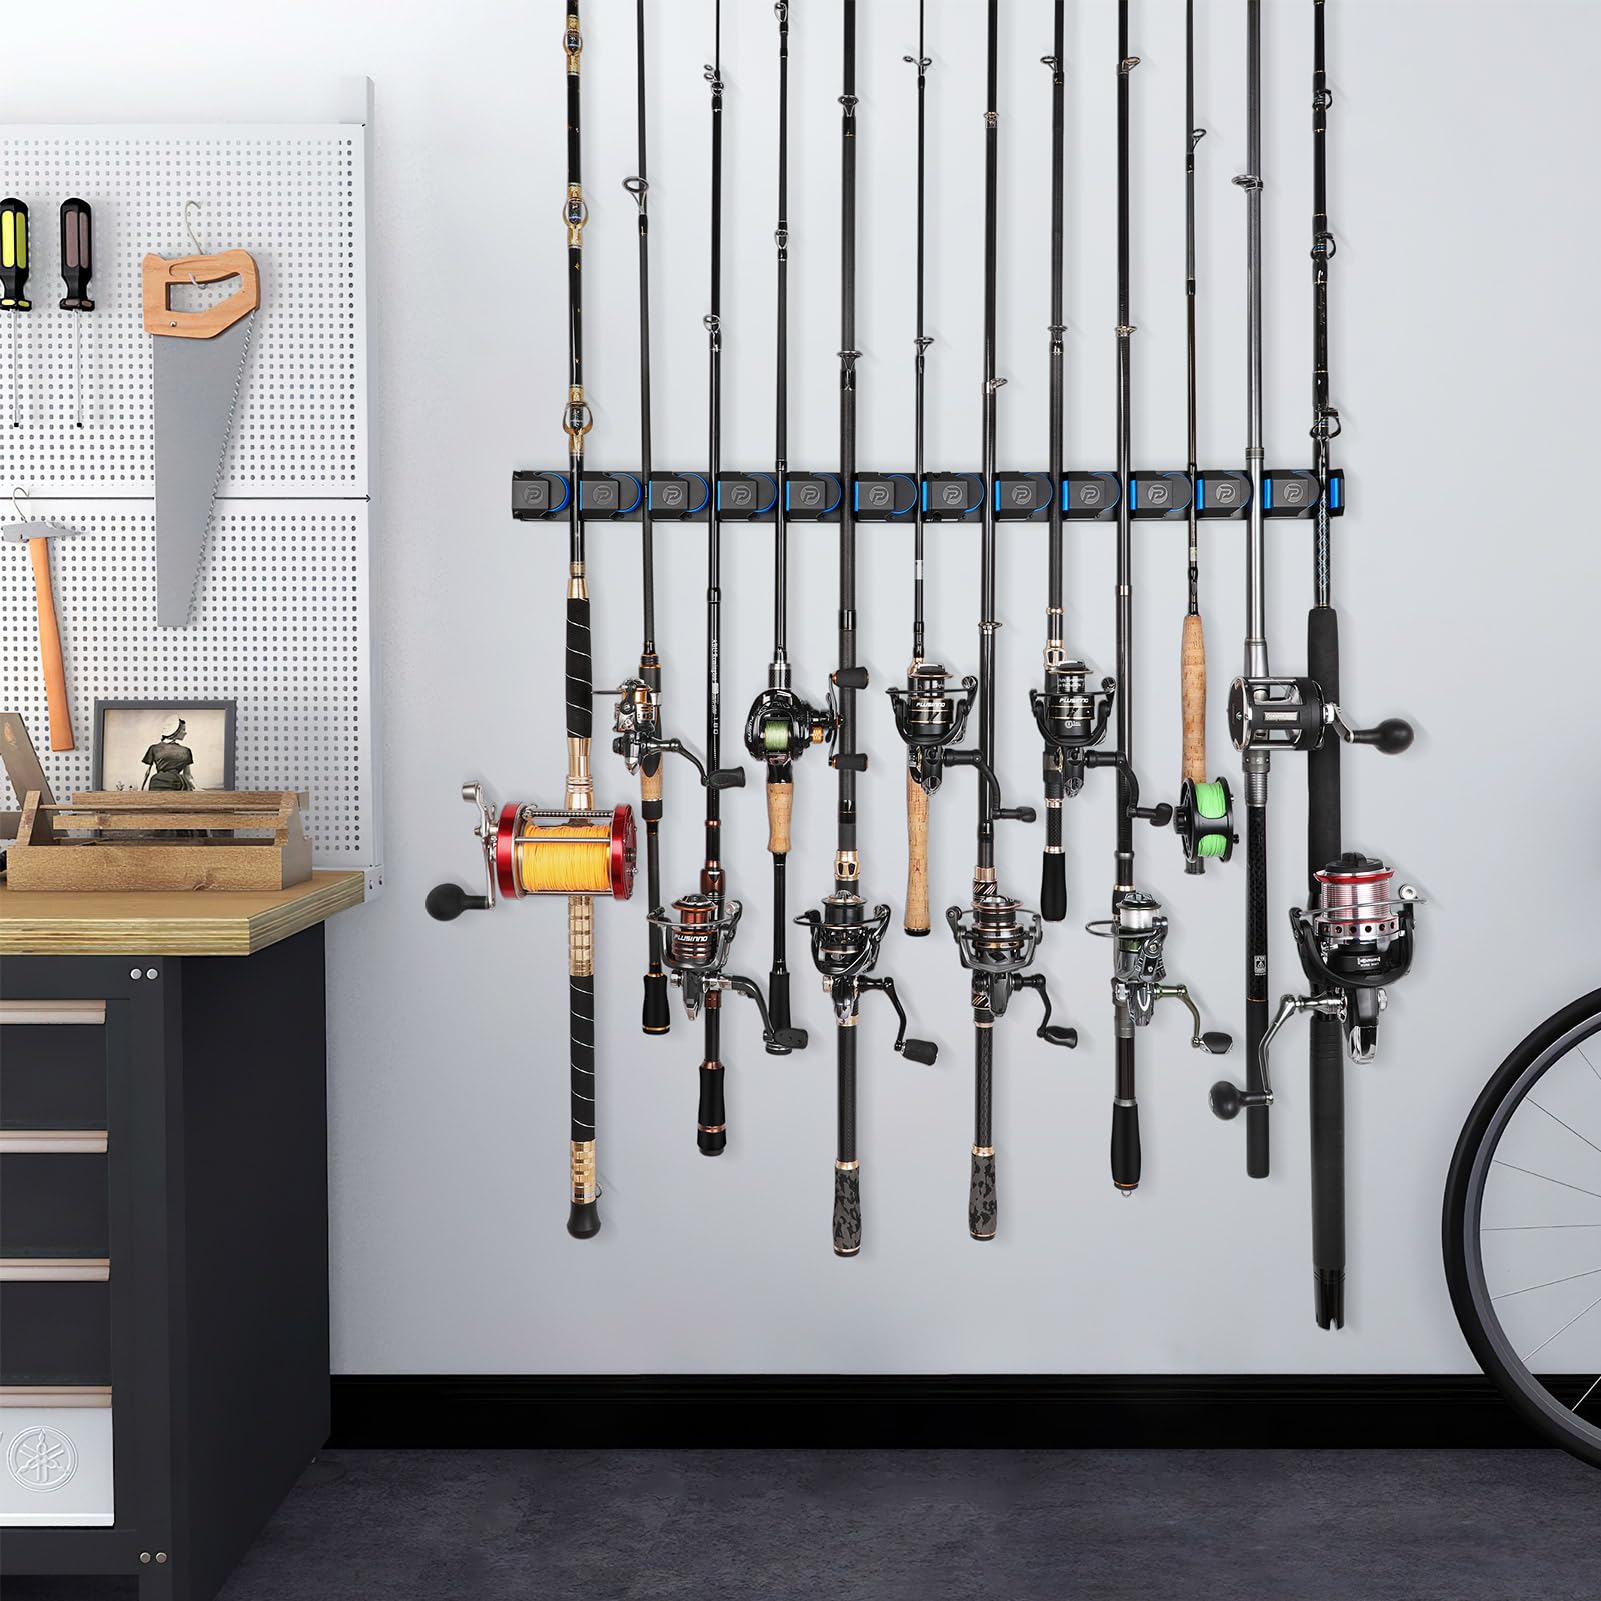 PLUSINNO V6 Fishing Rods Holder Vertical Wall Mount Fishing Rod Rack for Garage